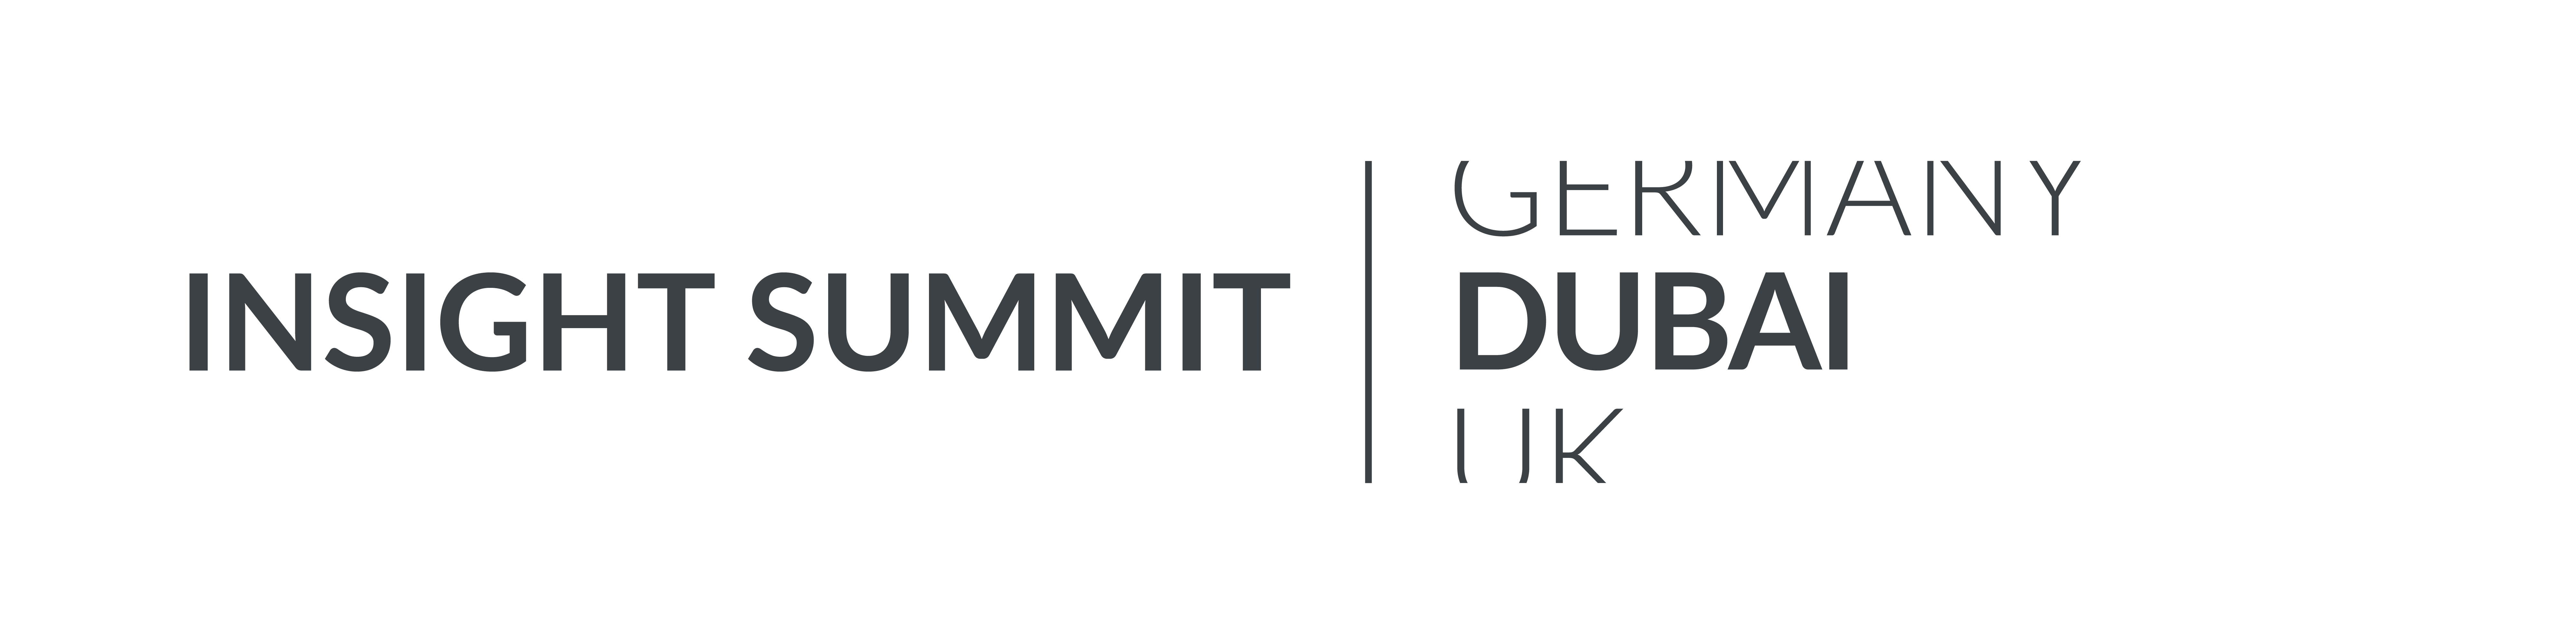 Insight-Summit_Franchise-Dubai